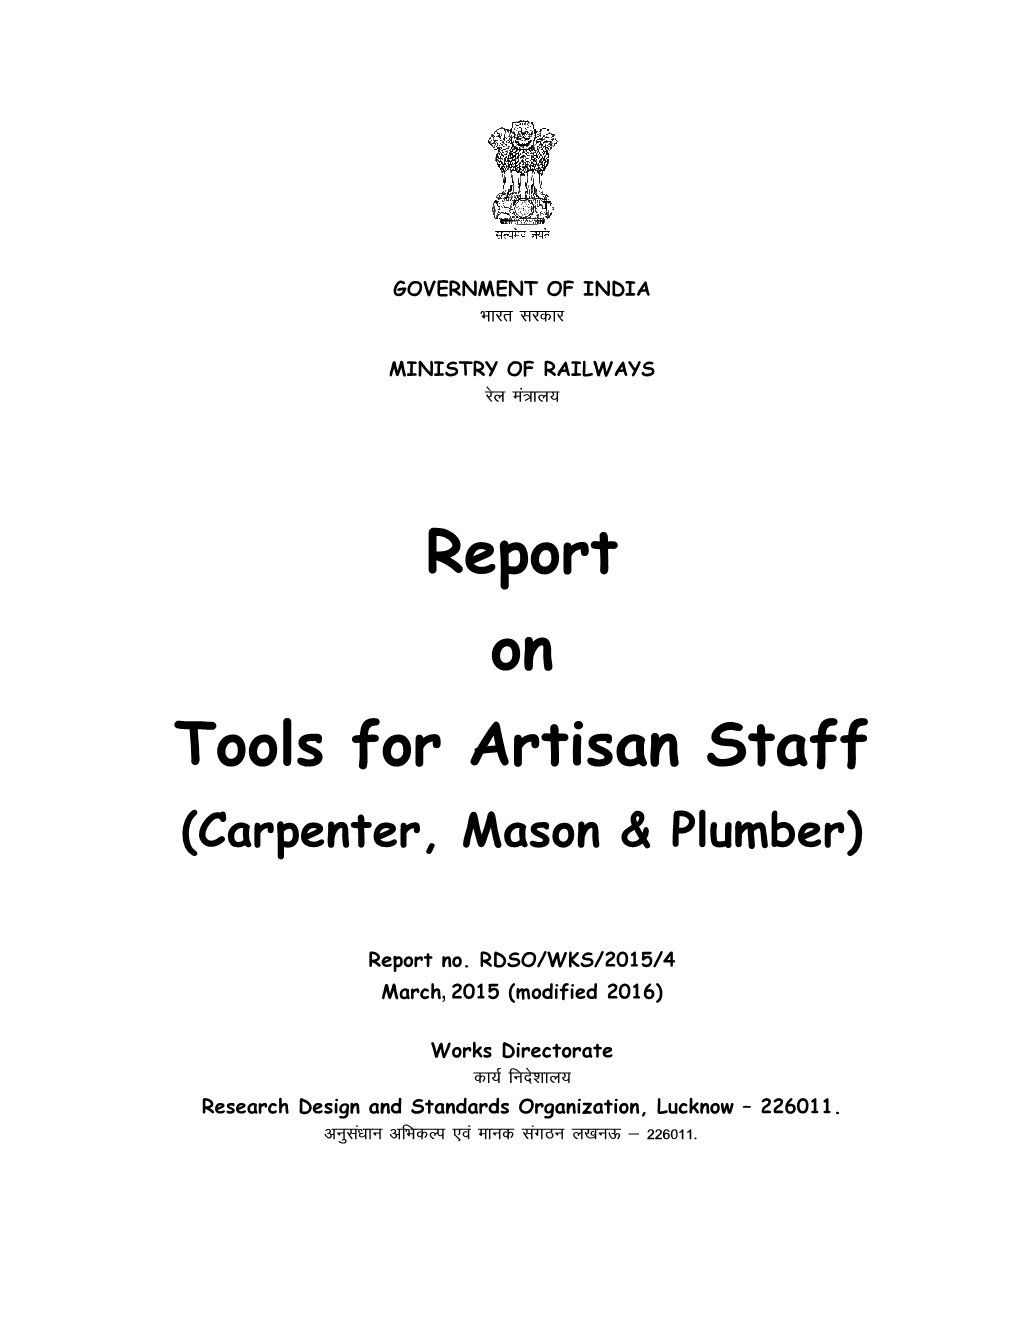 Report on Tools for Artisan Staff (Carpenter, Mason & Plumber)